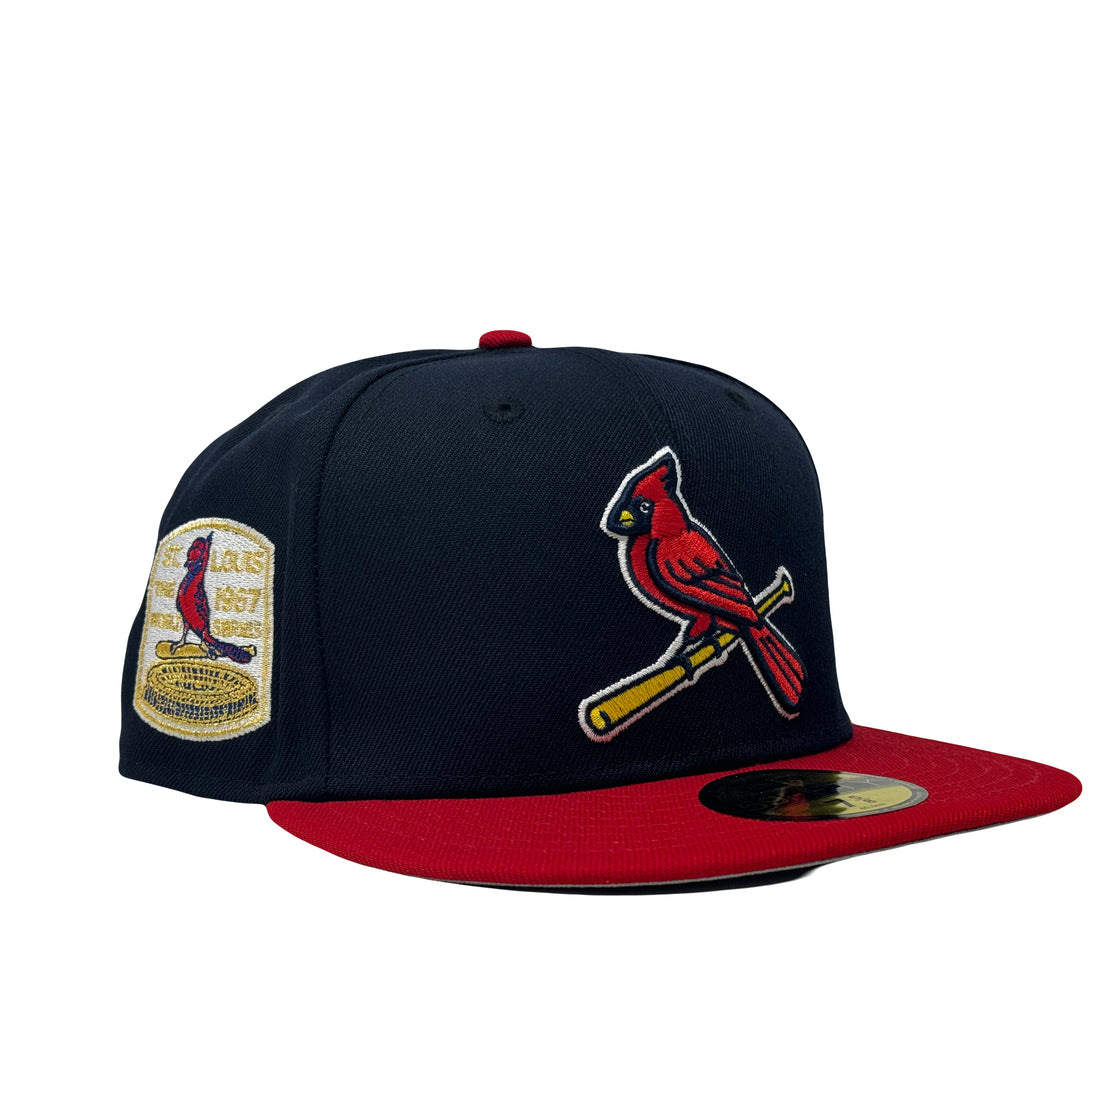 St. Louis Cardinals 1967 World Series 5950 Gray Brim New Era Fitted Hat